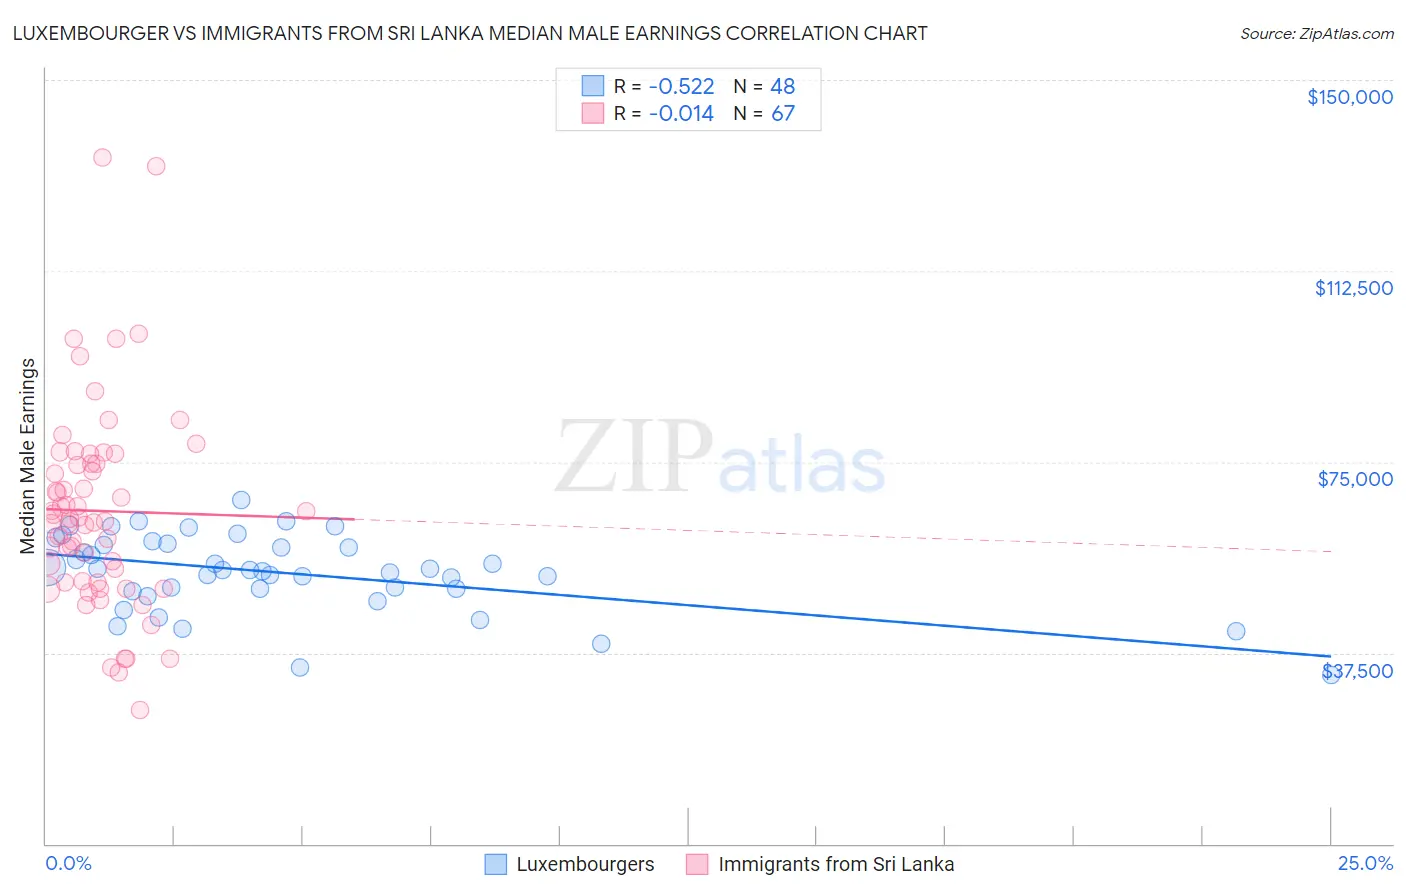 Luxembourger vs Immigrants from Sri Lanka Median Male Earnings